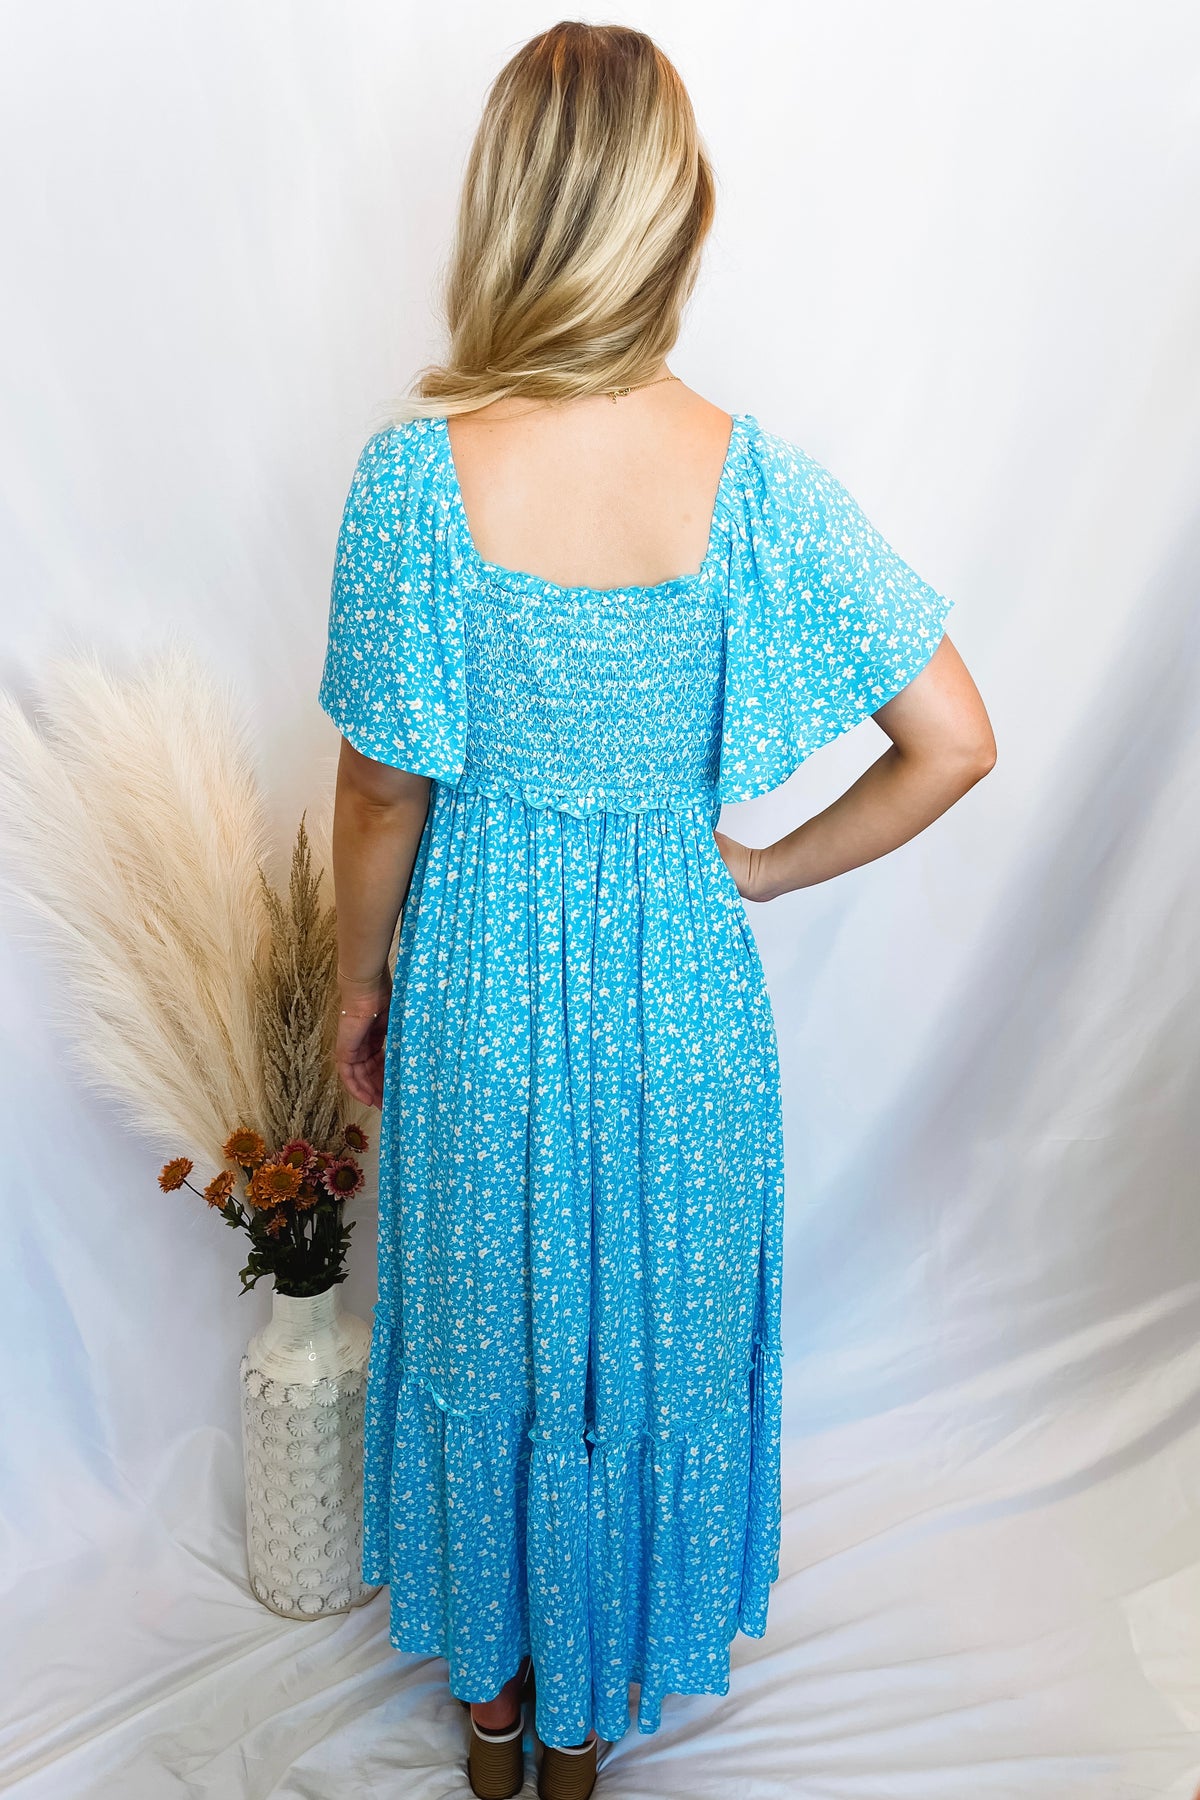 Bring On The Sunshine Floral Maxi Dress - Blue